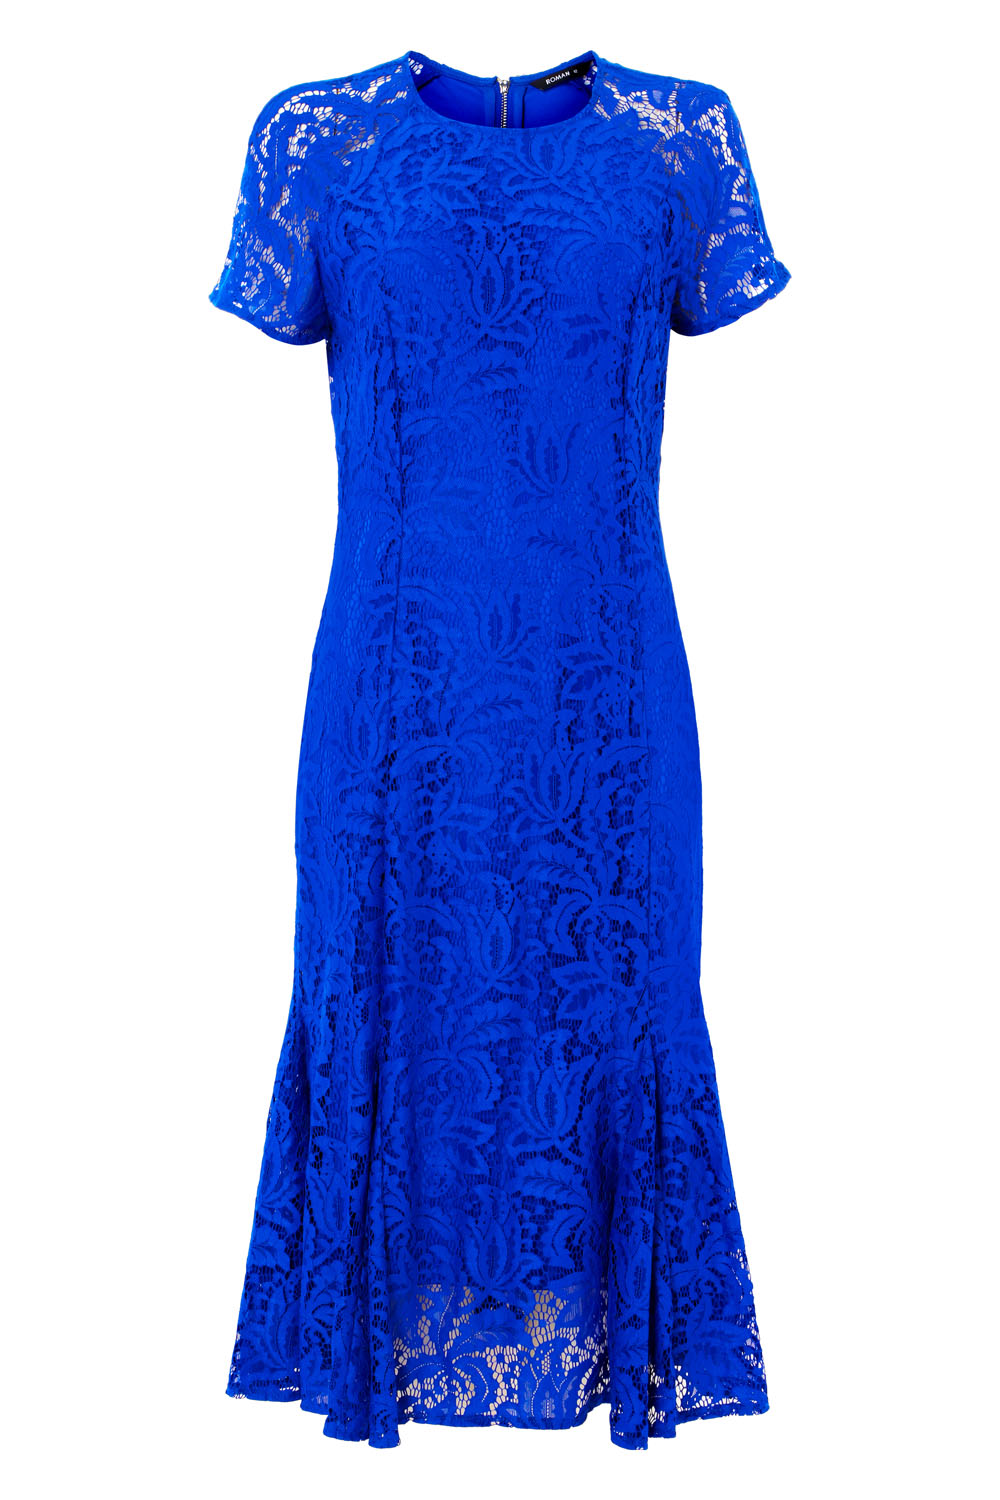 Flute Hem Lace Midi Dress in Royal Blue - Roman Originals UK